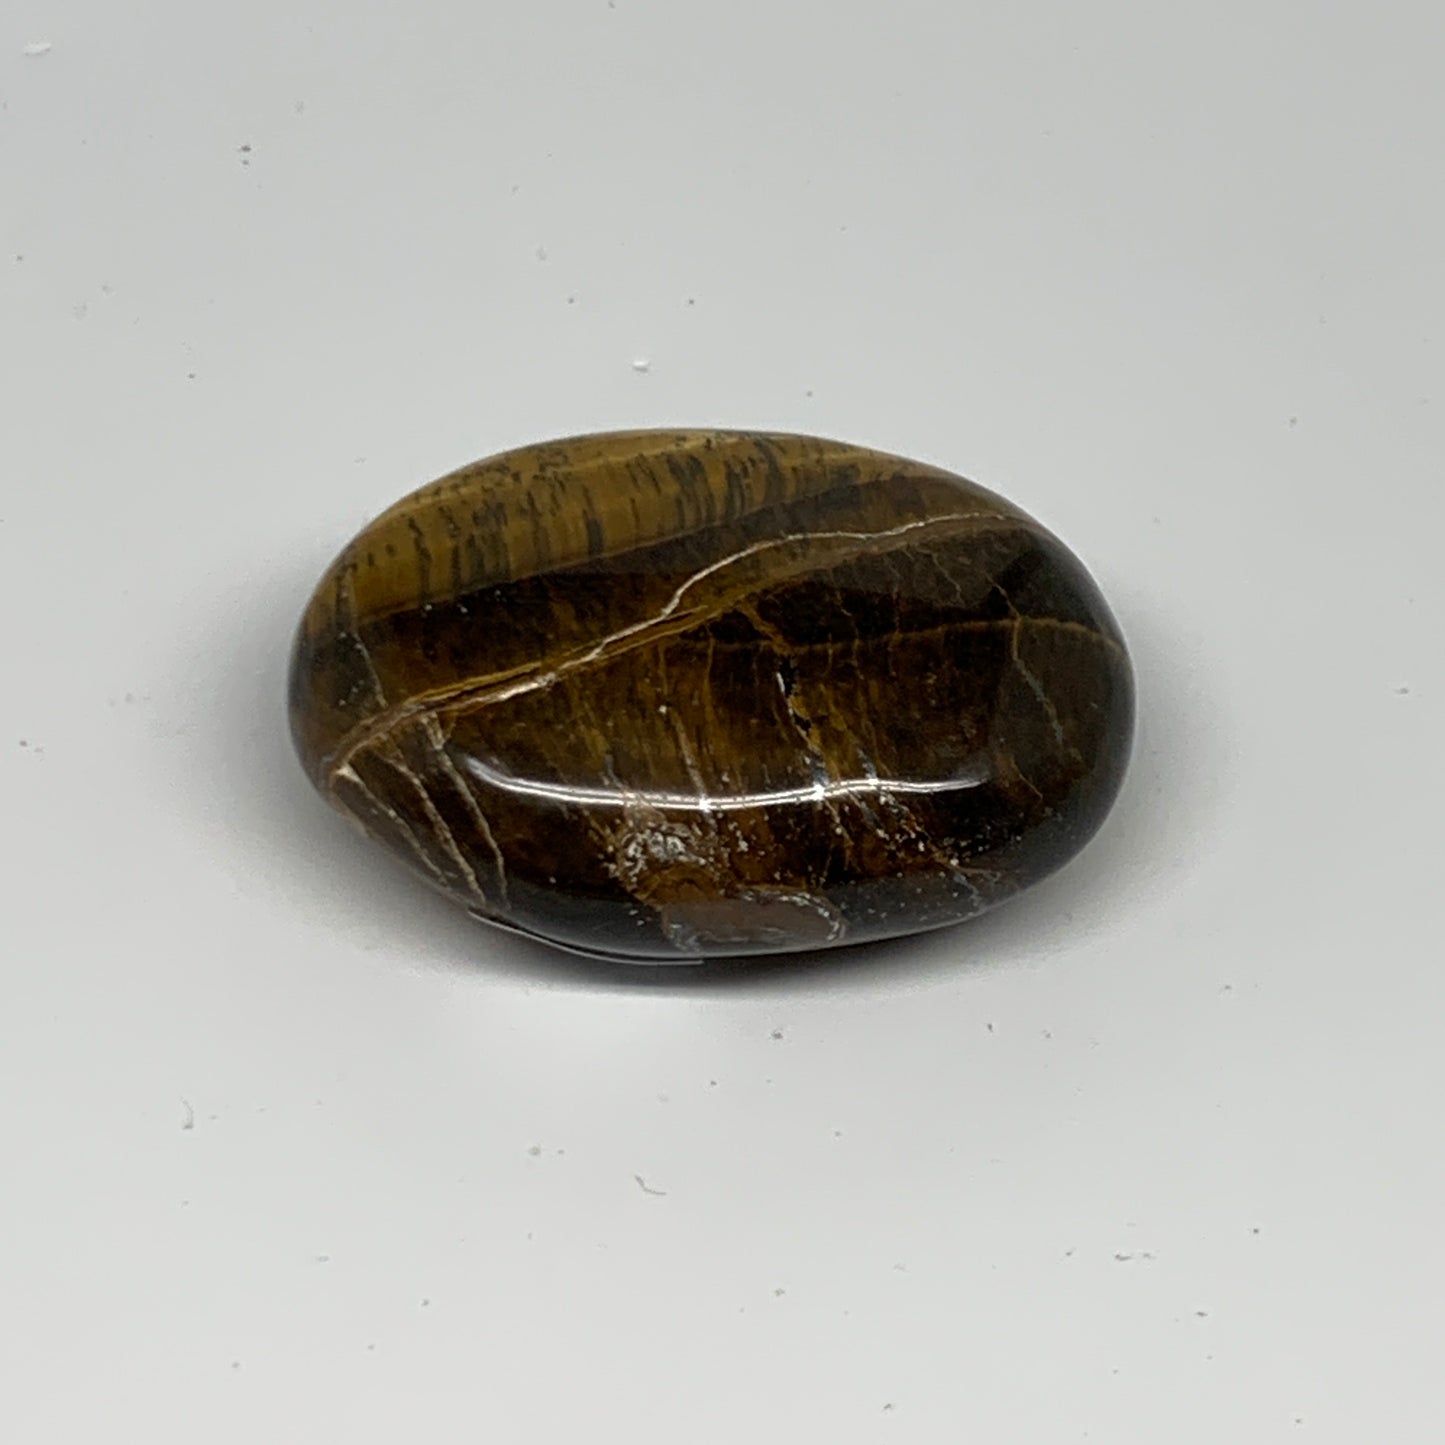 74.9g, 2.1"x1.6"x0.8", Natural Tiger's Eye Palm-Stone Gemstone @India, B27960